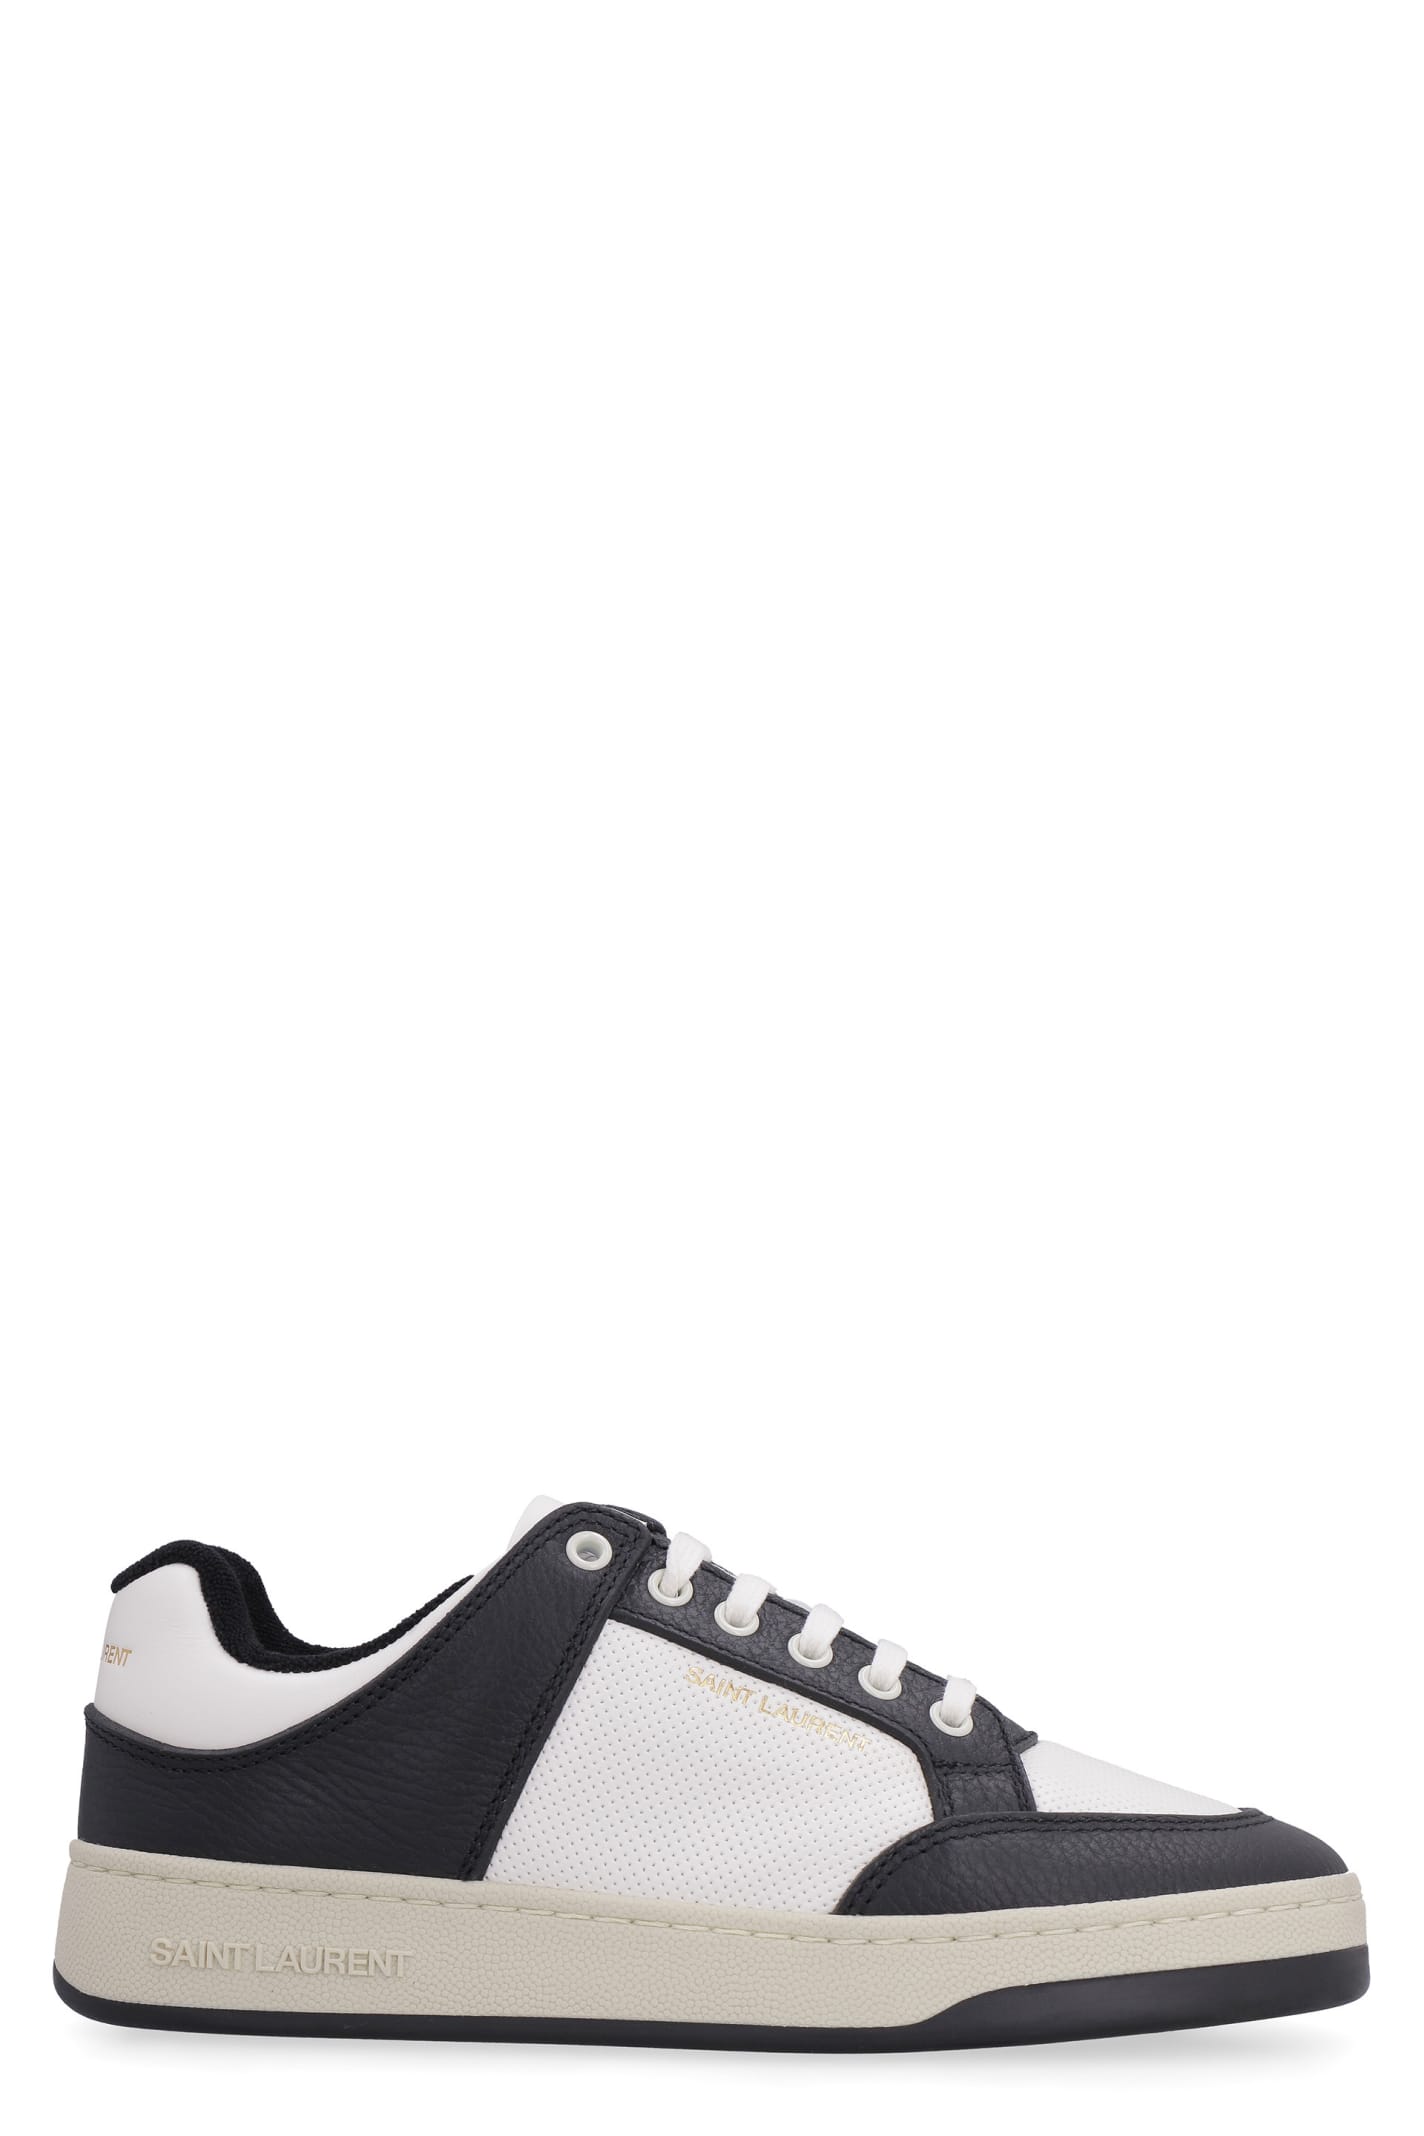 Saint Laurent Sl/61 Leather Low-top Sneakers